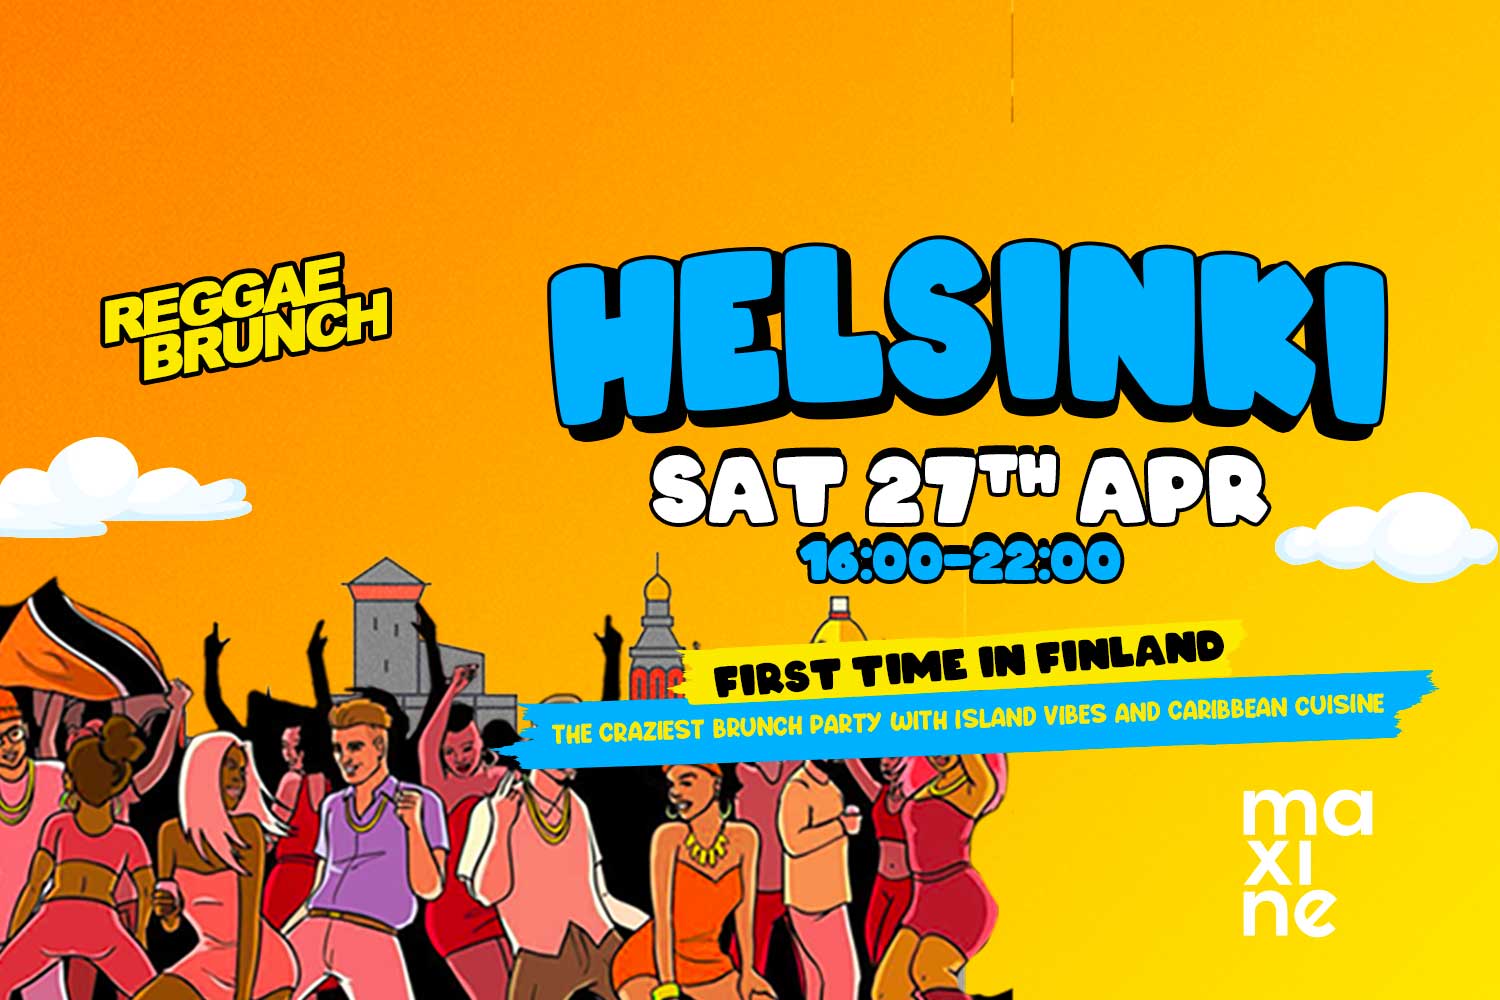 Sat, 27th Apr| Helsinki "Finland"